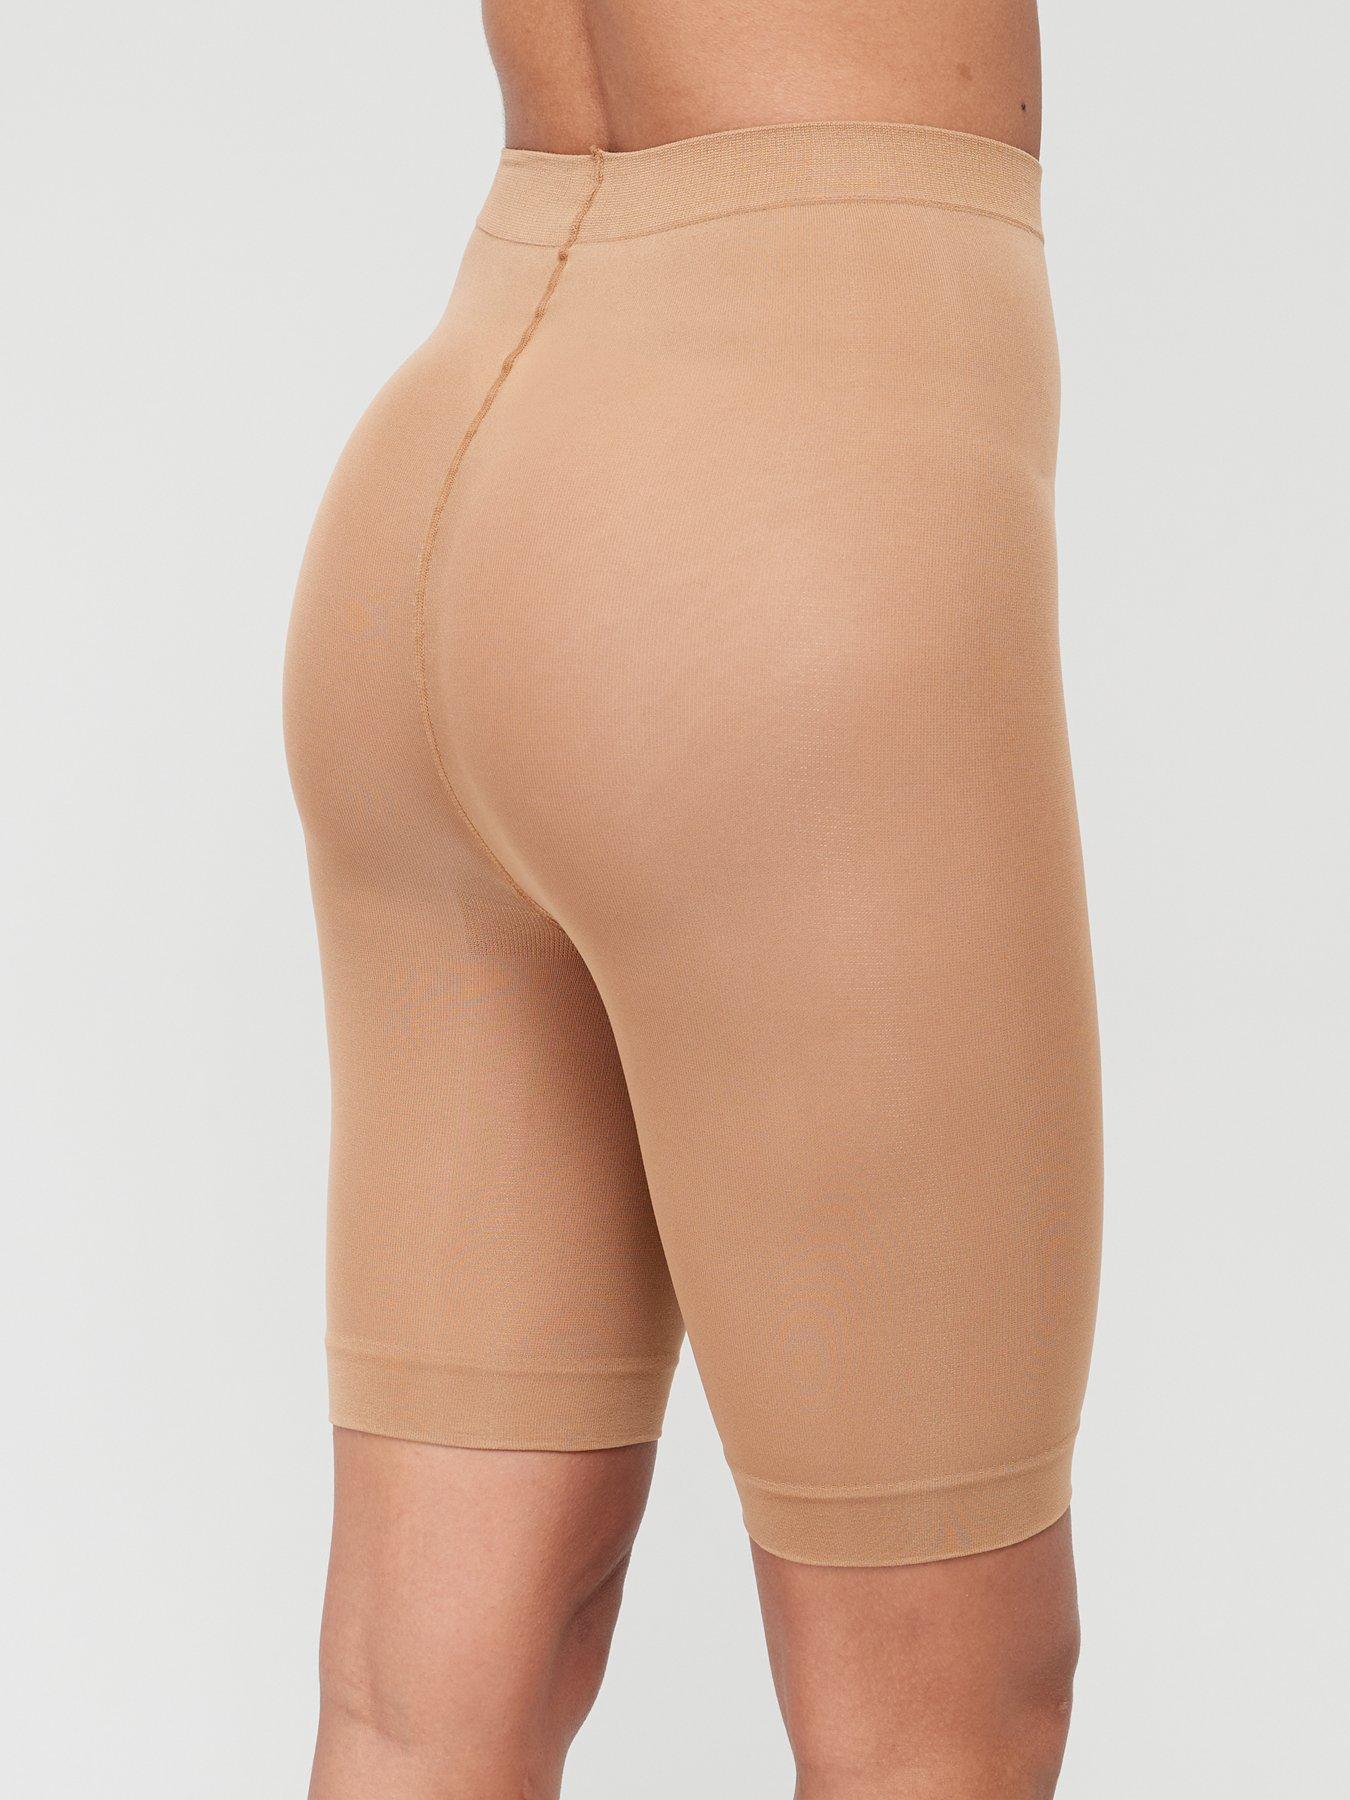 Joyshaper Women's Anti Chafing Underwear Slip Shorts for Under